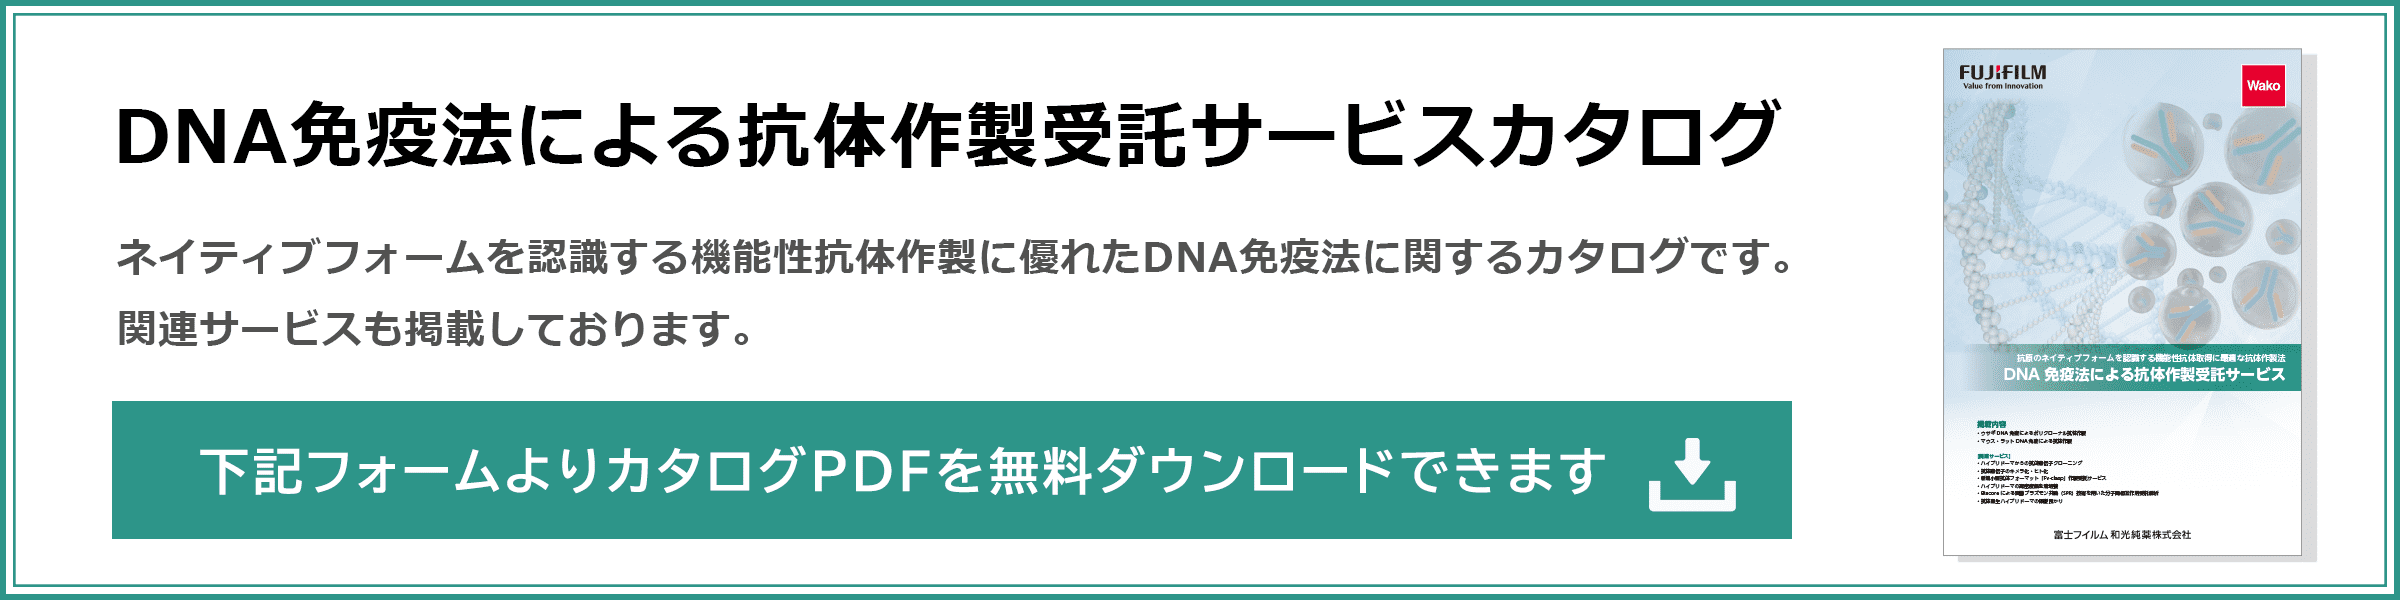 DNA免疫法による抗体作製受託サービスカタログ ダウンロードフォーム